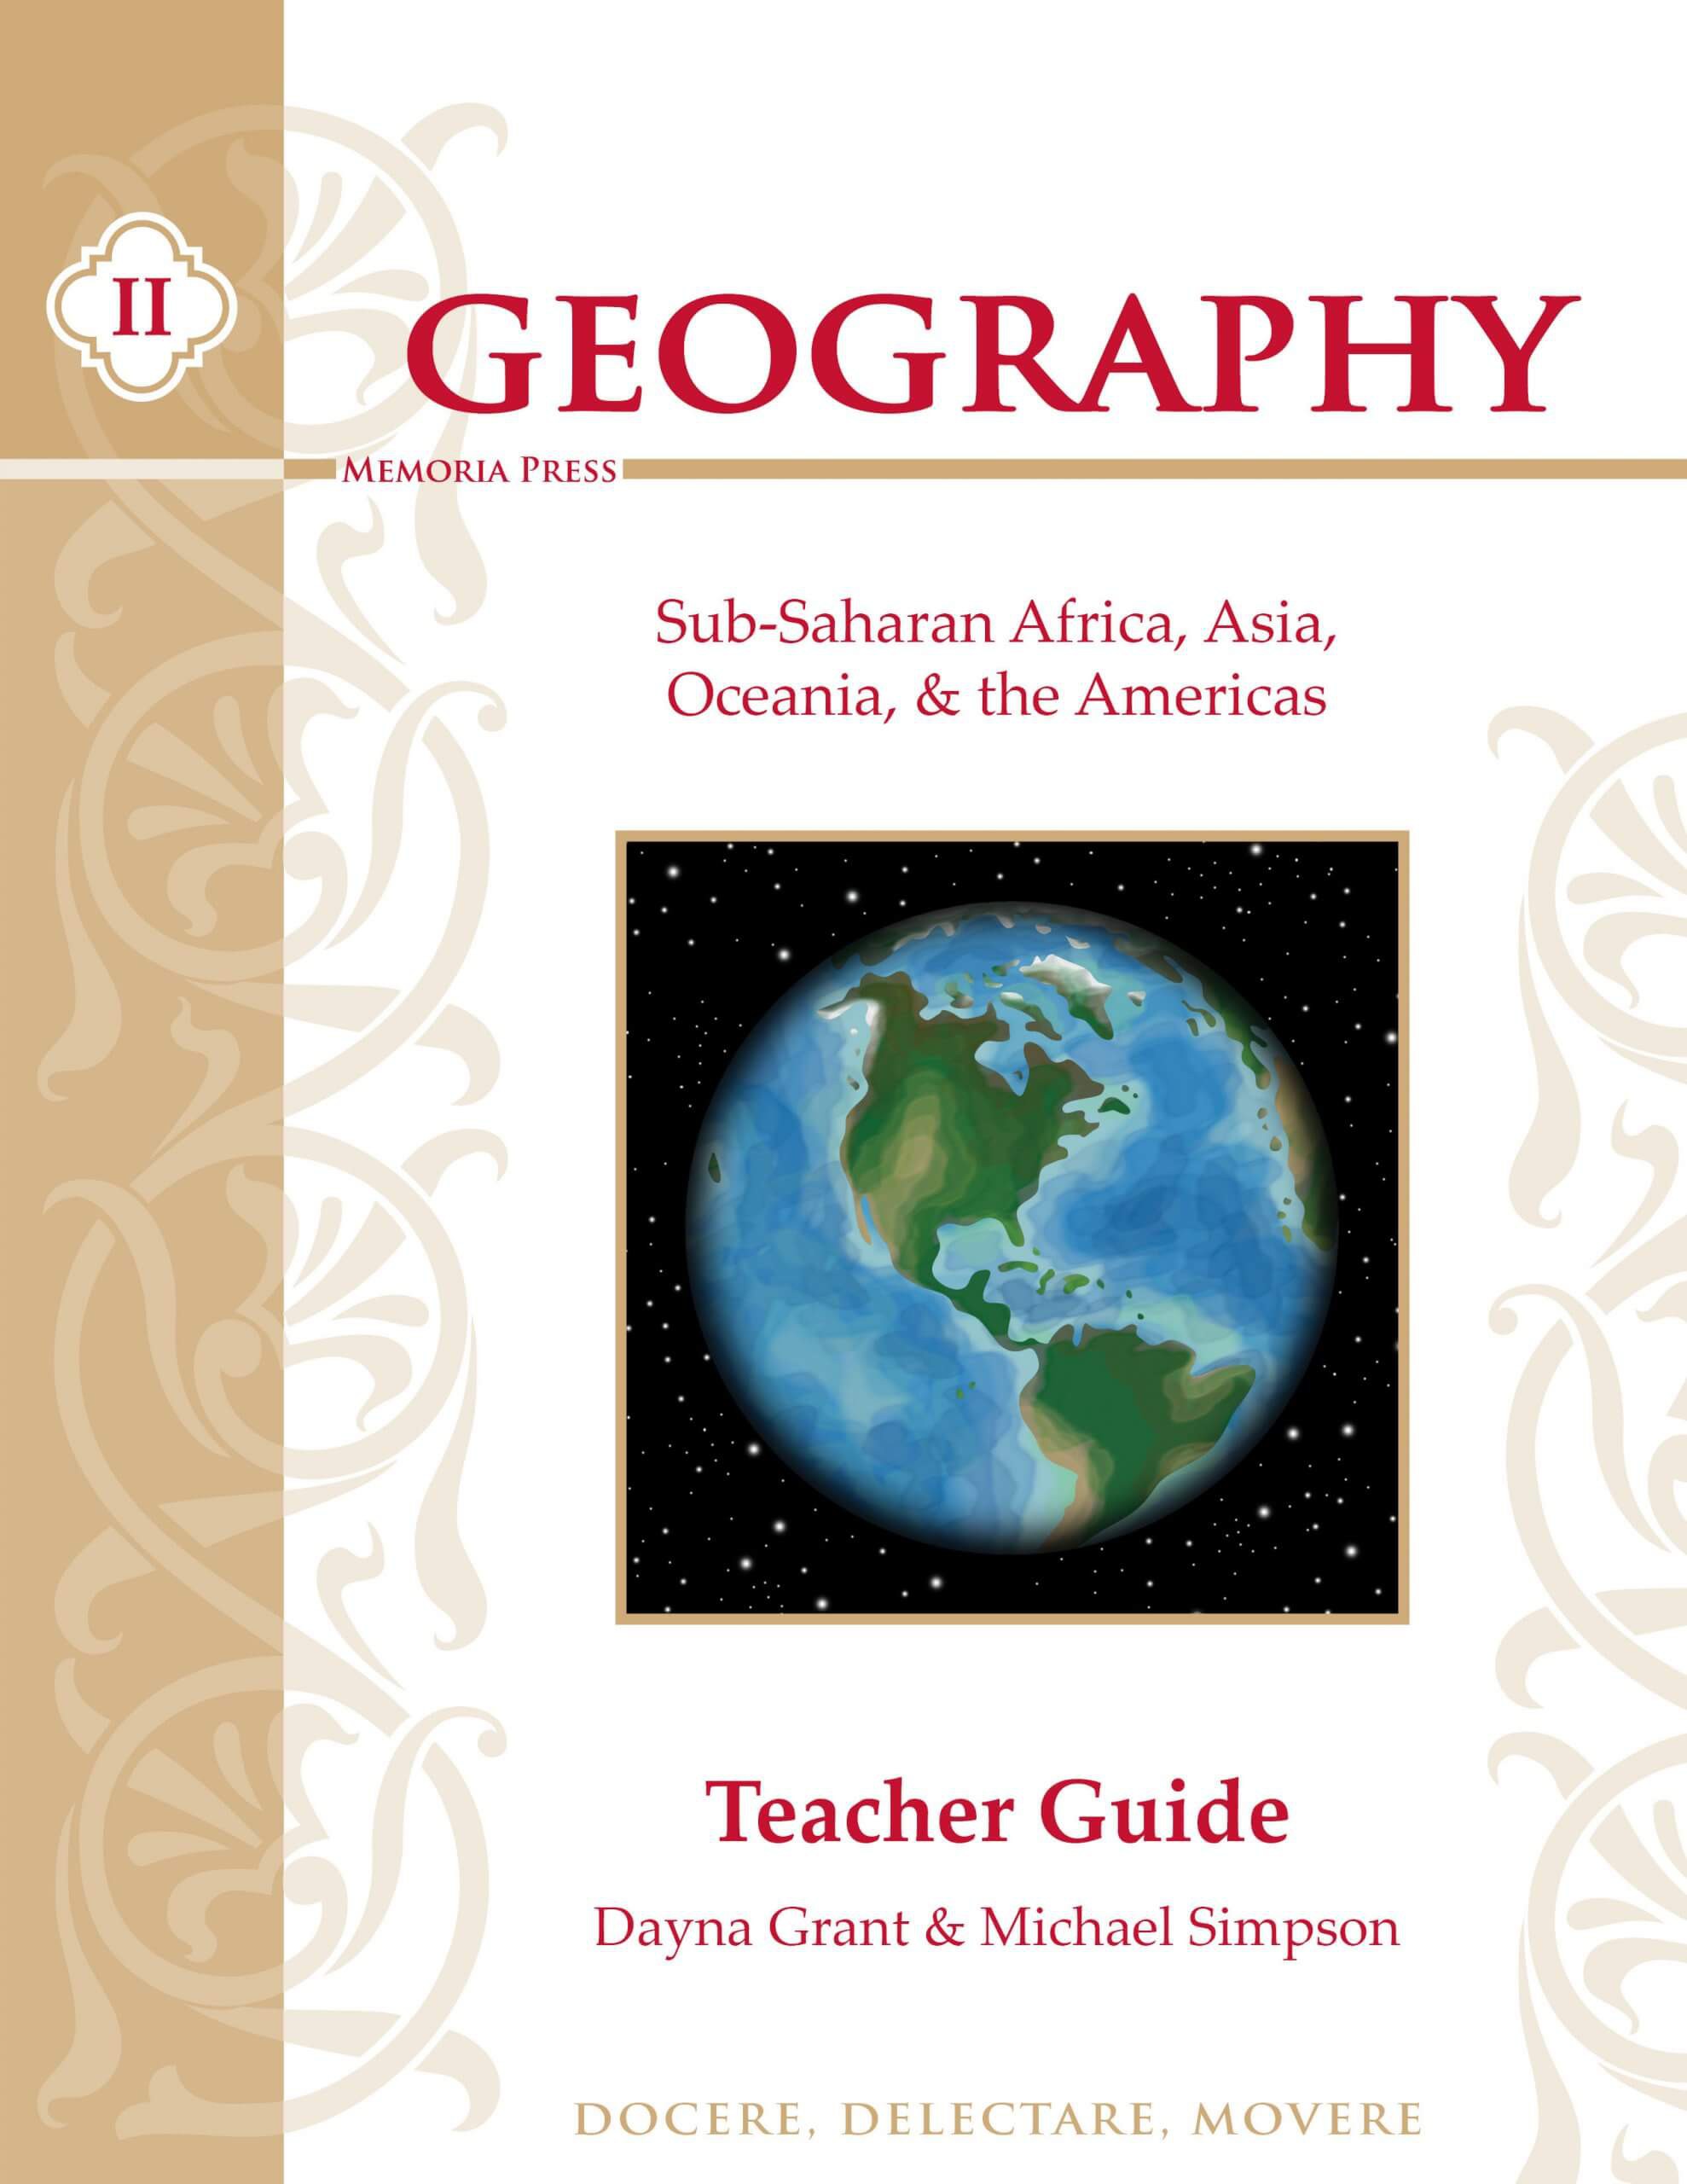 Geography II: Sub-Saharan Africa, Asia, Oceania, & the Americas Teacher Guide